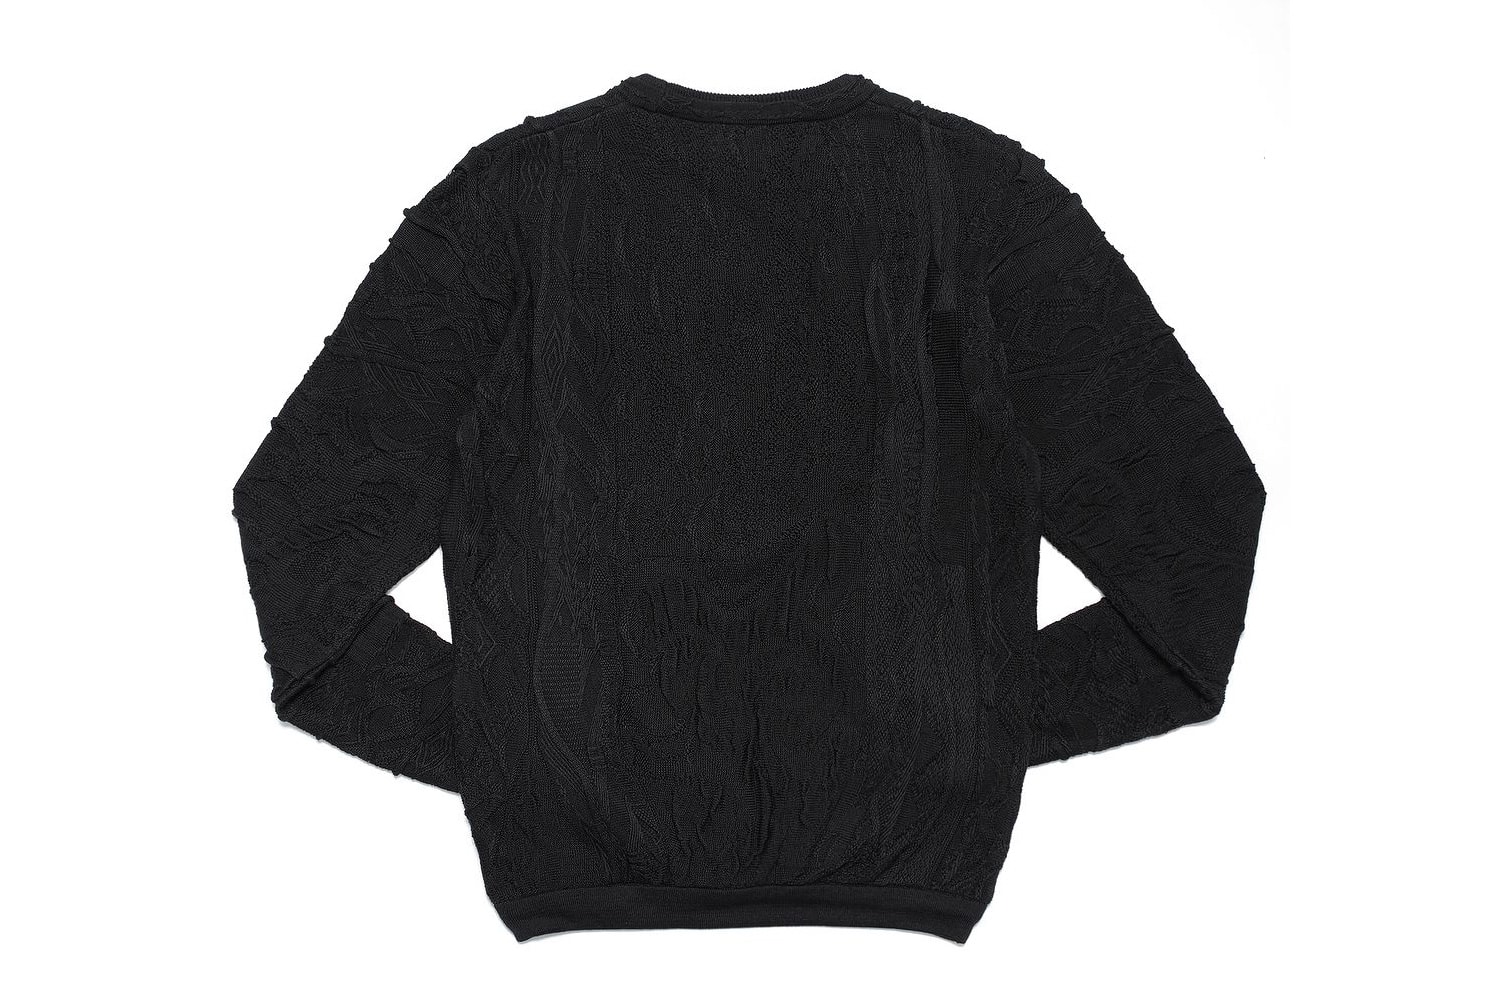 424 COOGI Sweater Black Friday 2017 Release Black Sweater November